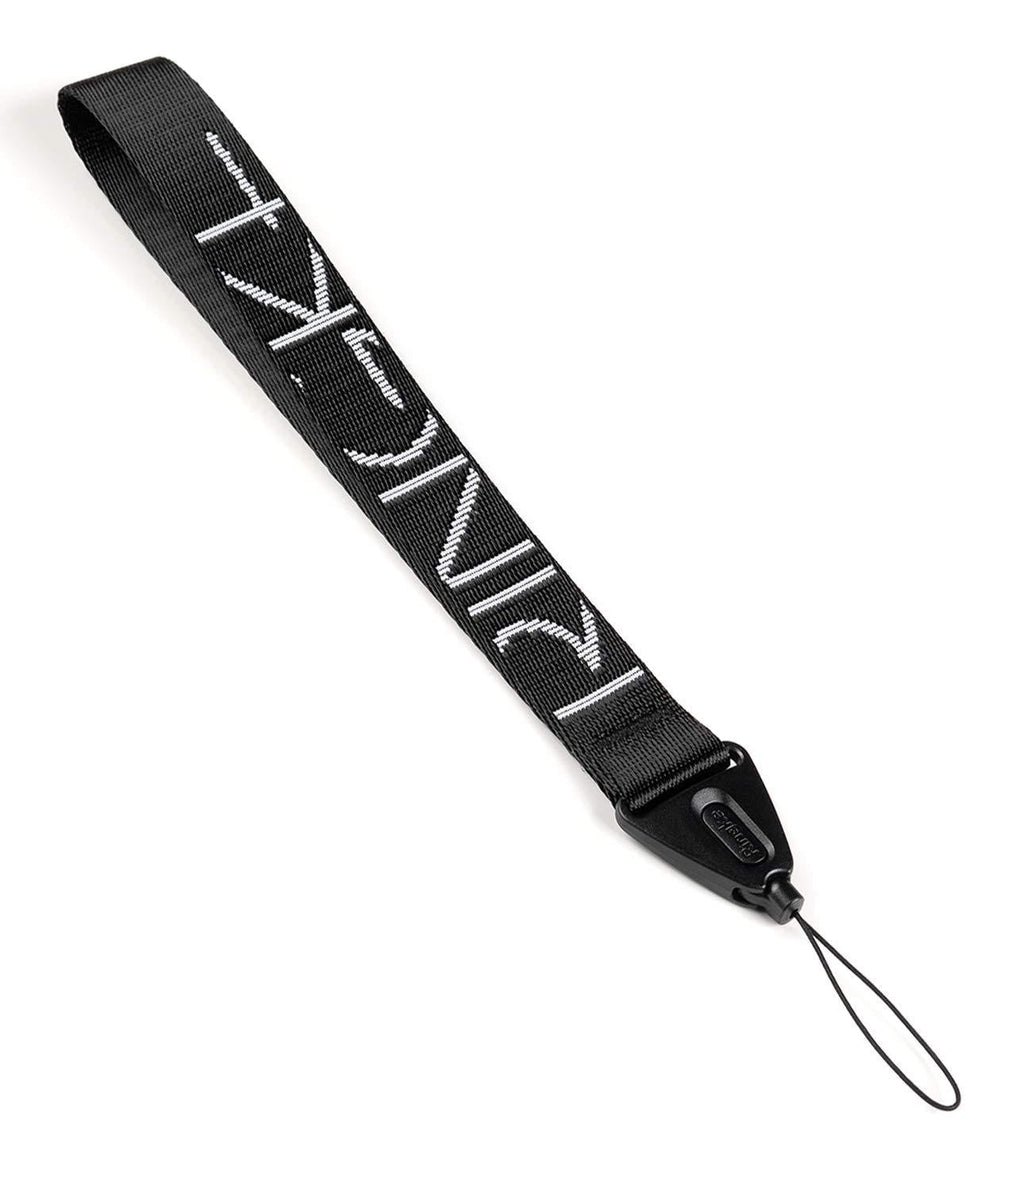 Ringke Lanyard Hand Strap Designed for Cell Phone Cases, Keys, Cameras & ID Wristlet Strap String - Lettering Black